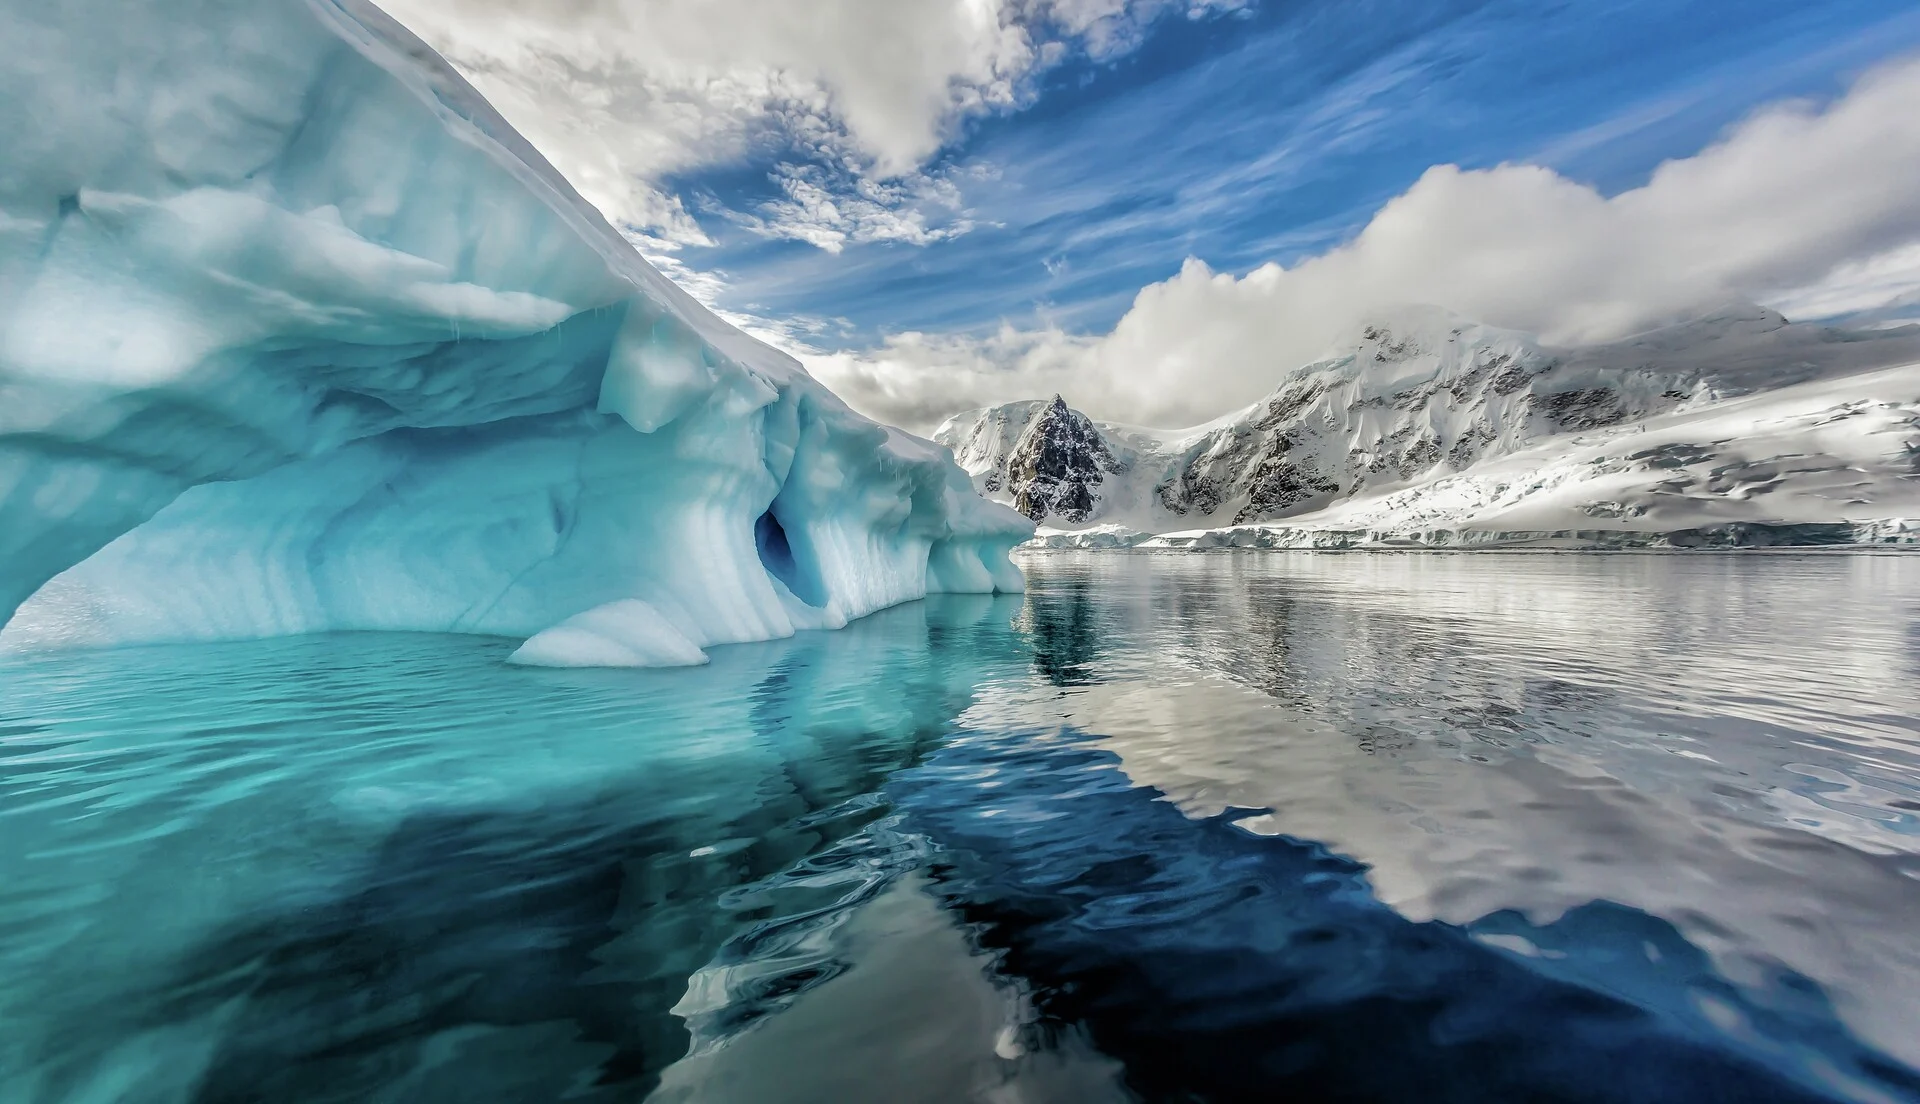 Iceberg in Andord Bay, Antarctica. Credit: Graham Lland / Jocrebbin